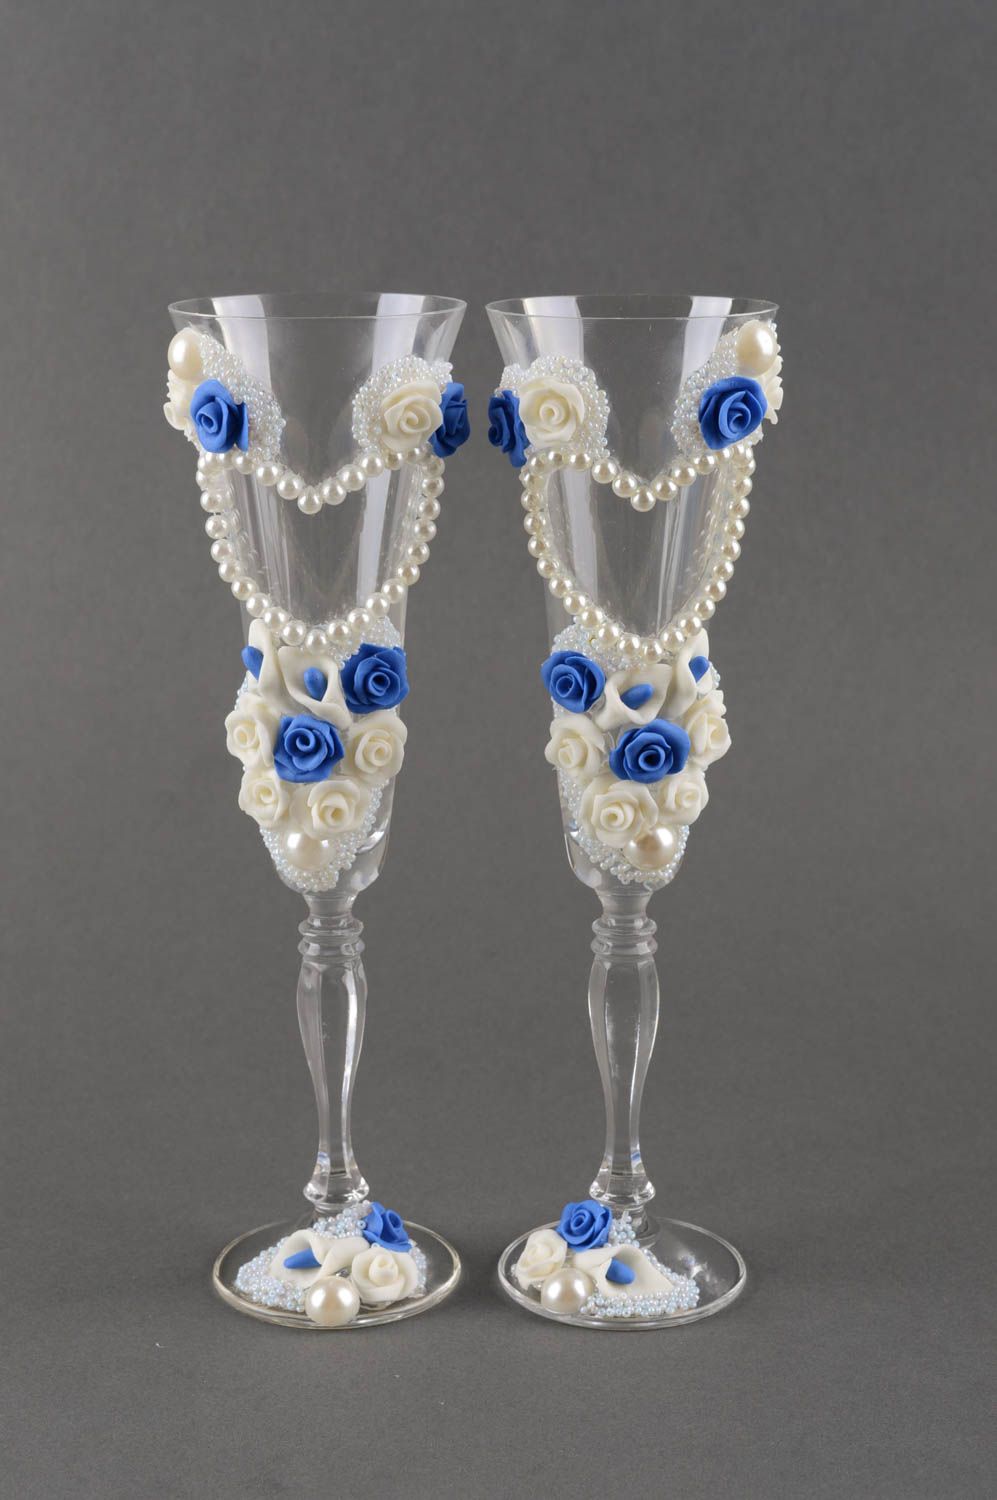 Wedding champagne glasses handmade decorative wine glasses wedding gift ideas photo 2